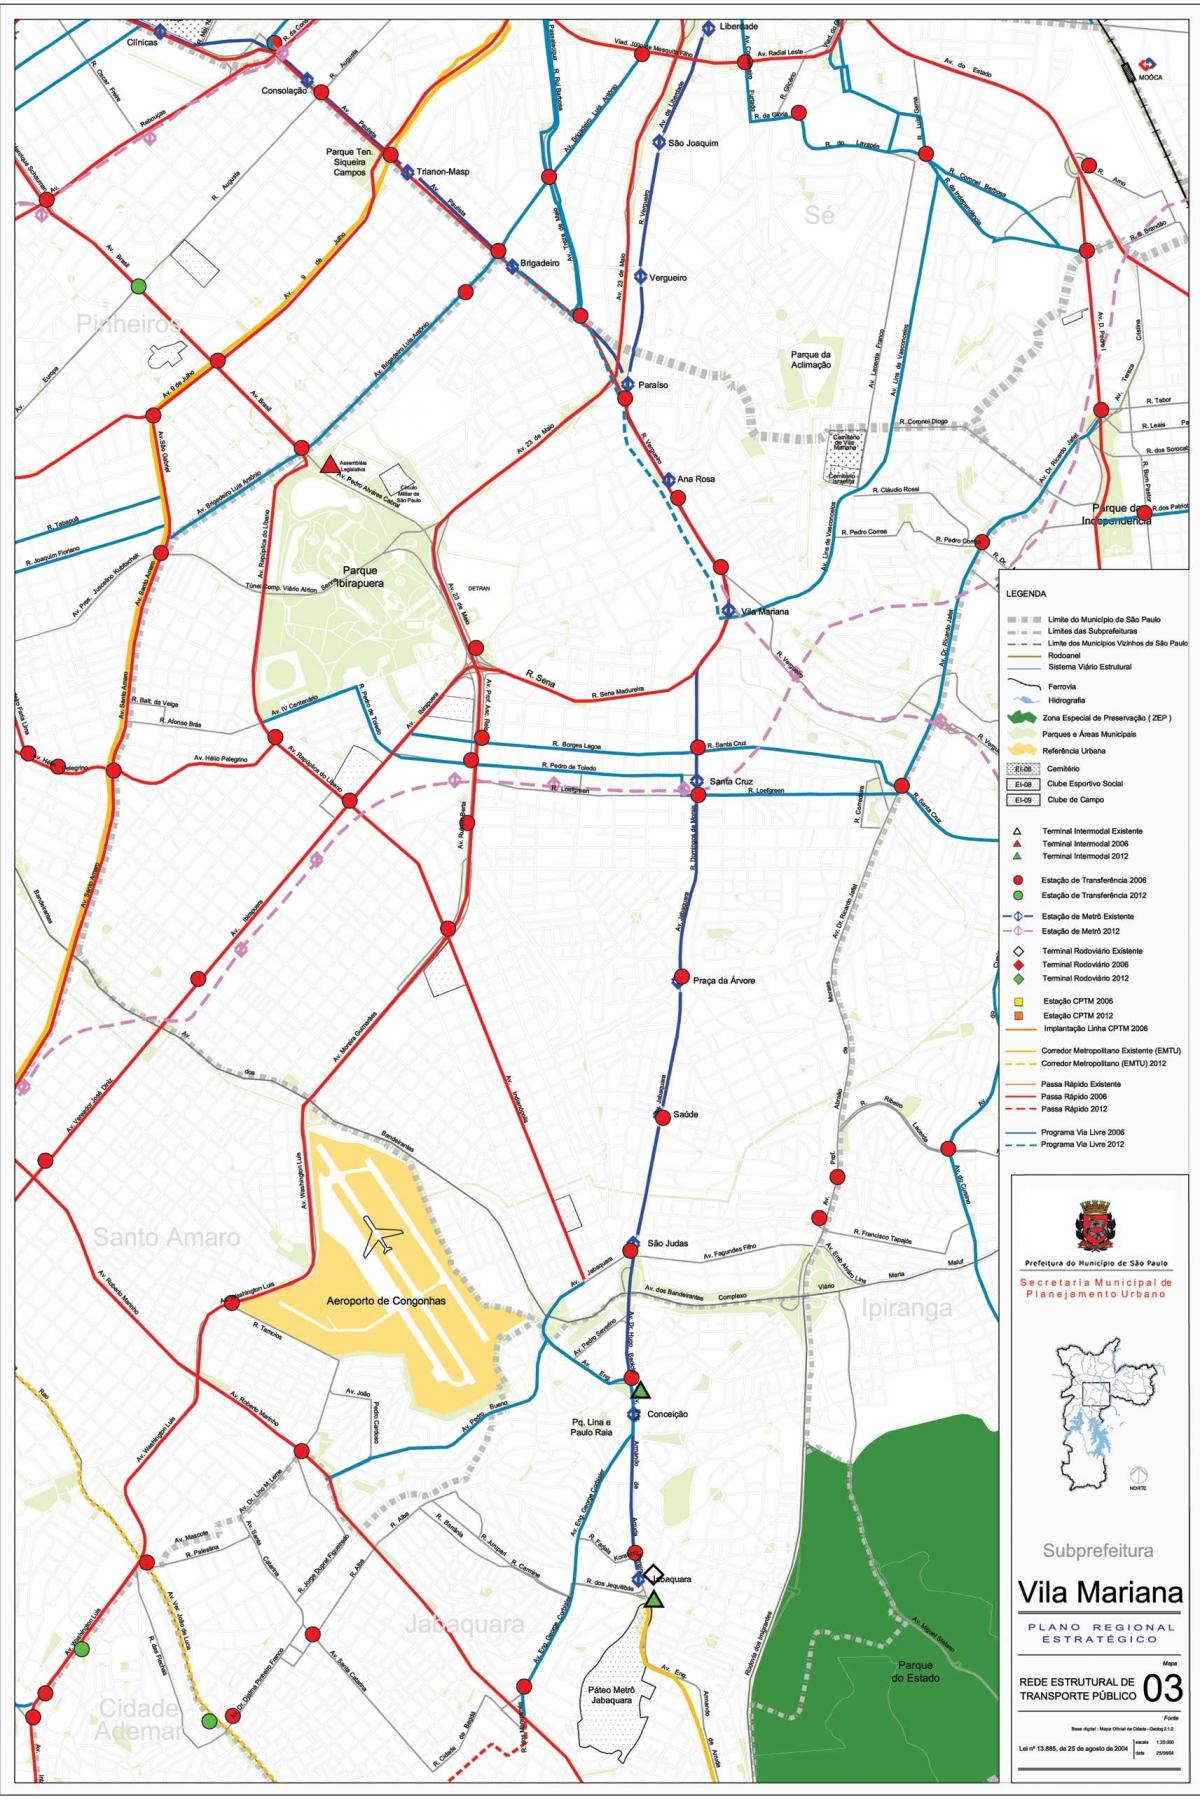 Mapa de Vila Mariana de São Paulo - el transporte Público